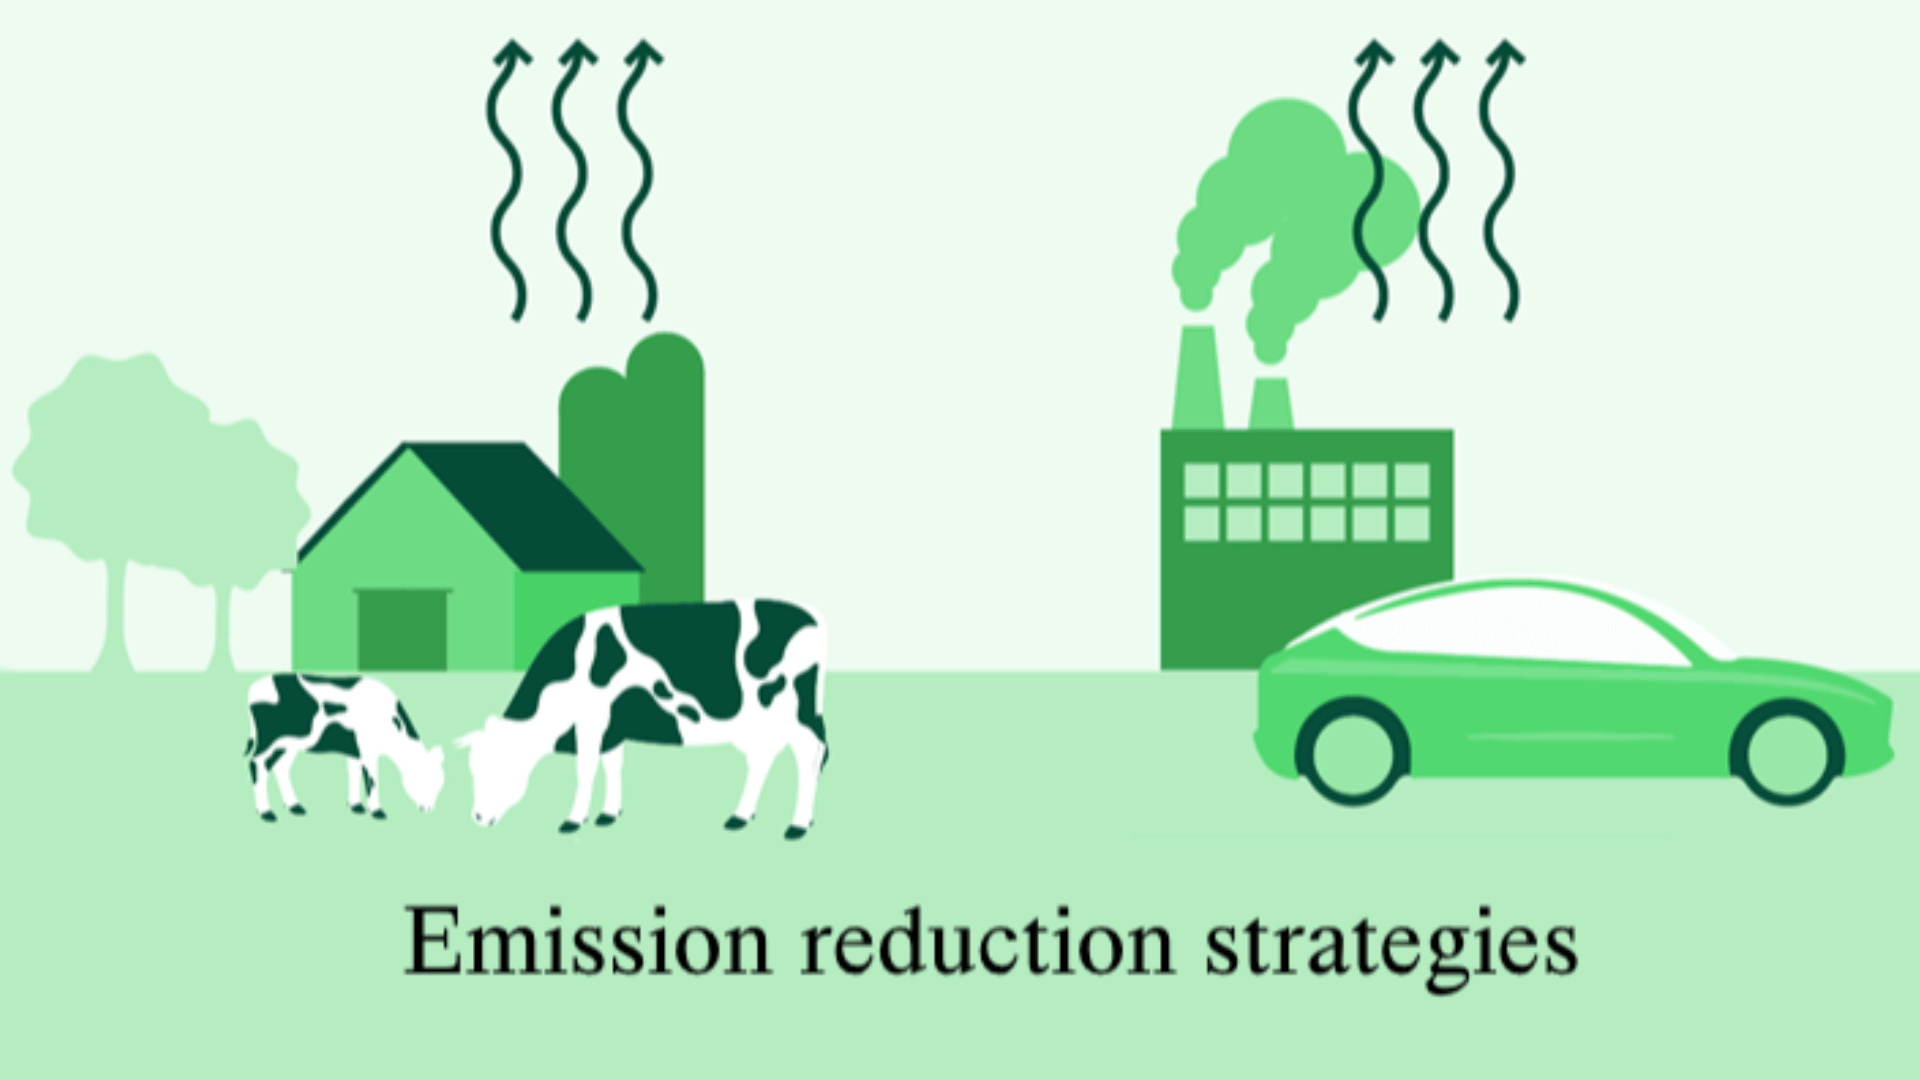 Emission reduction strategies infographic